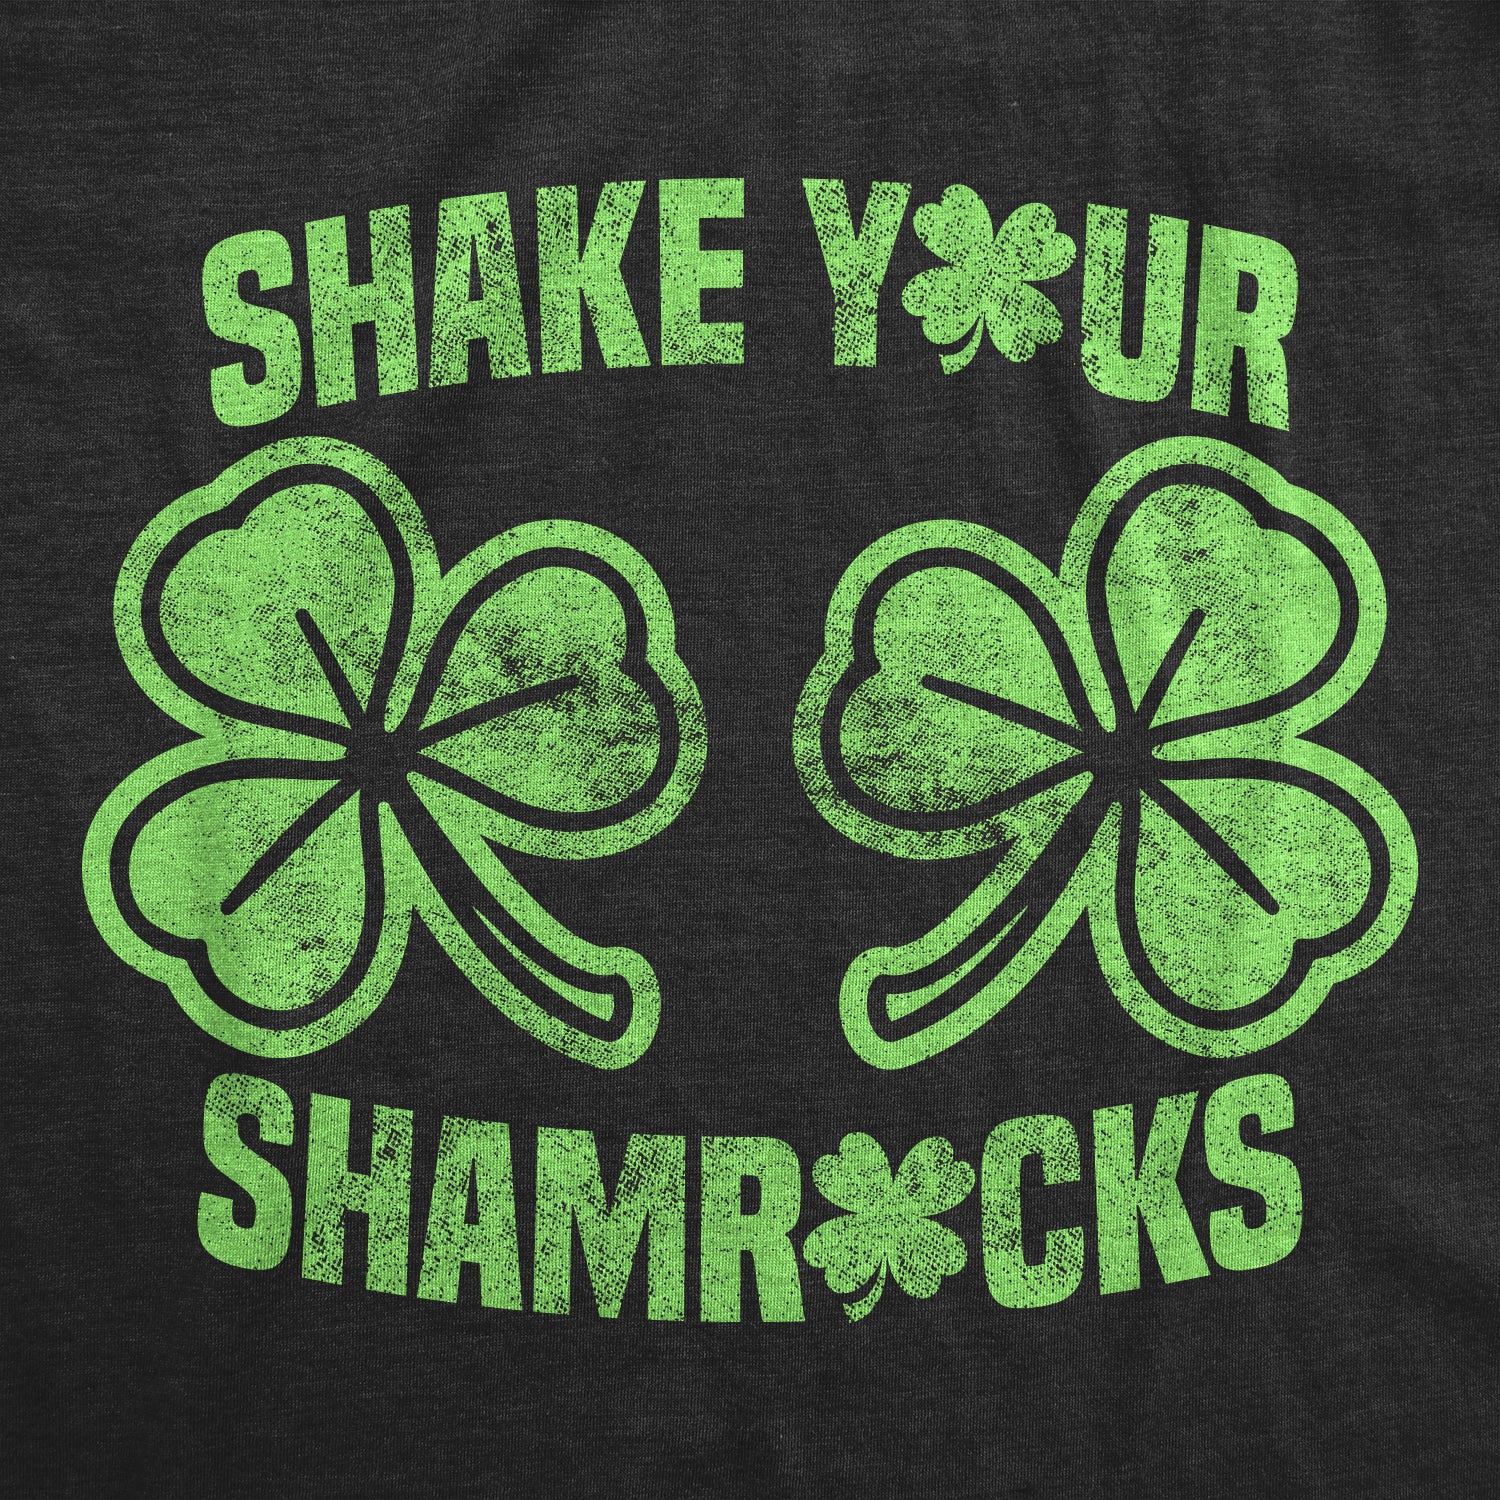 Womens Shake Your Shamrocks T shirt Funny St Patricks Day Boobs